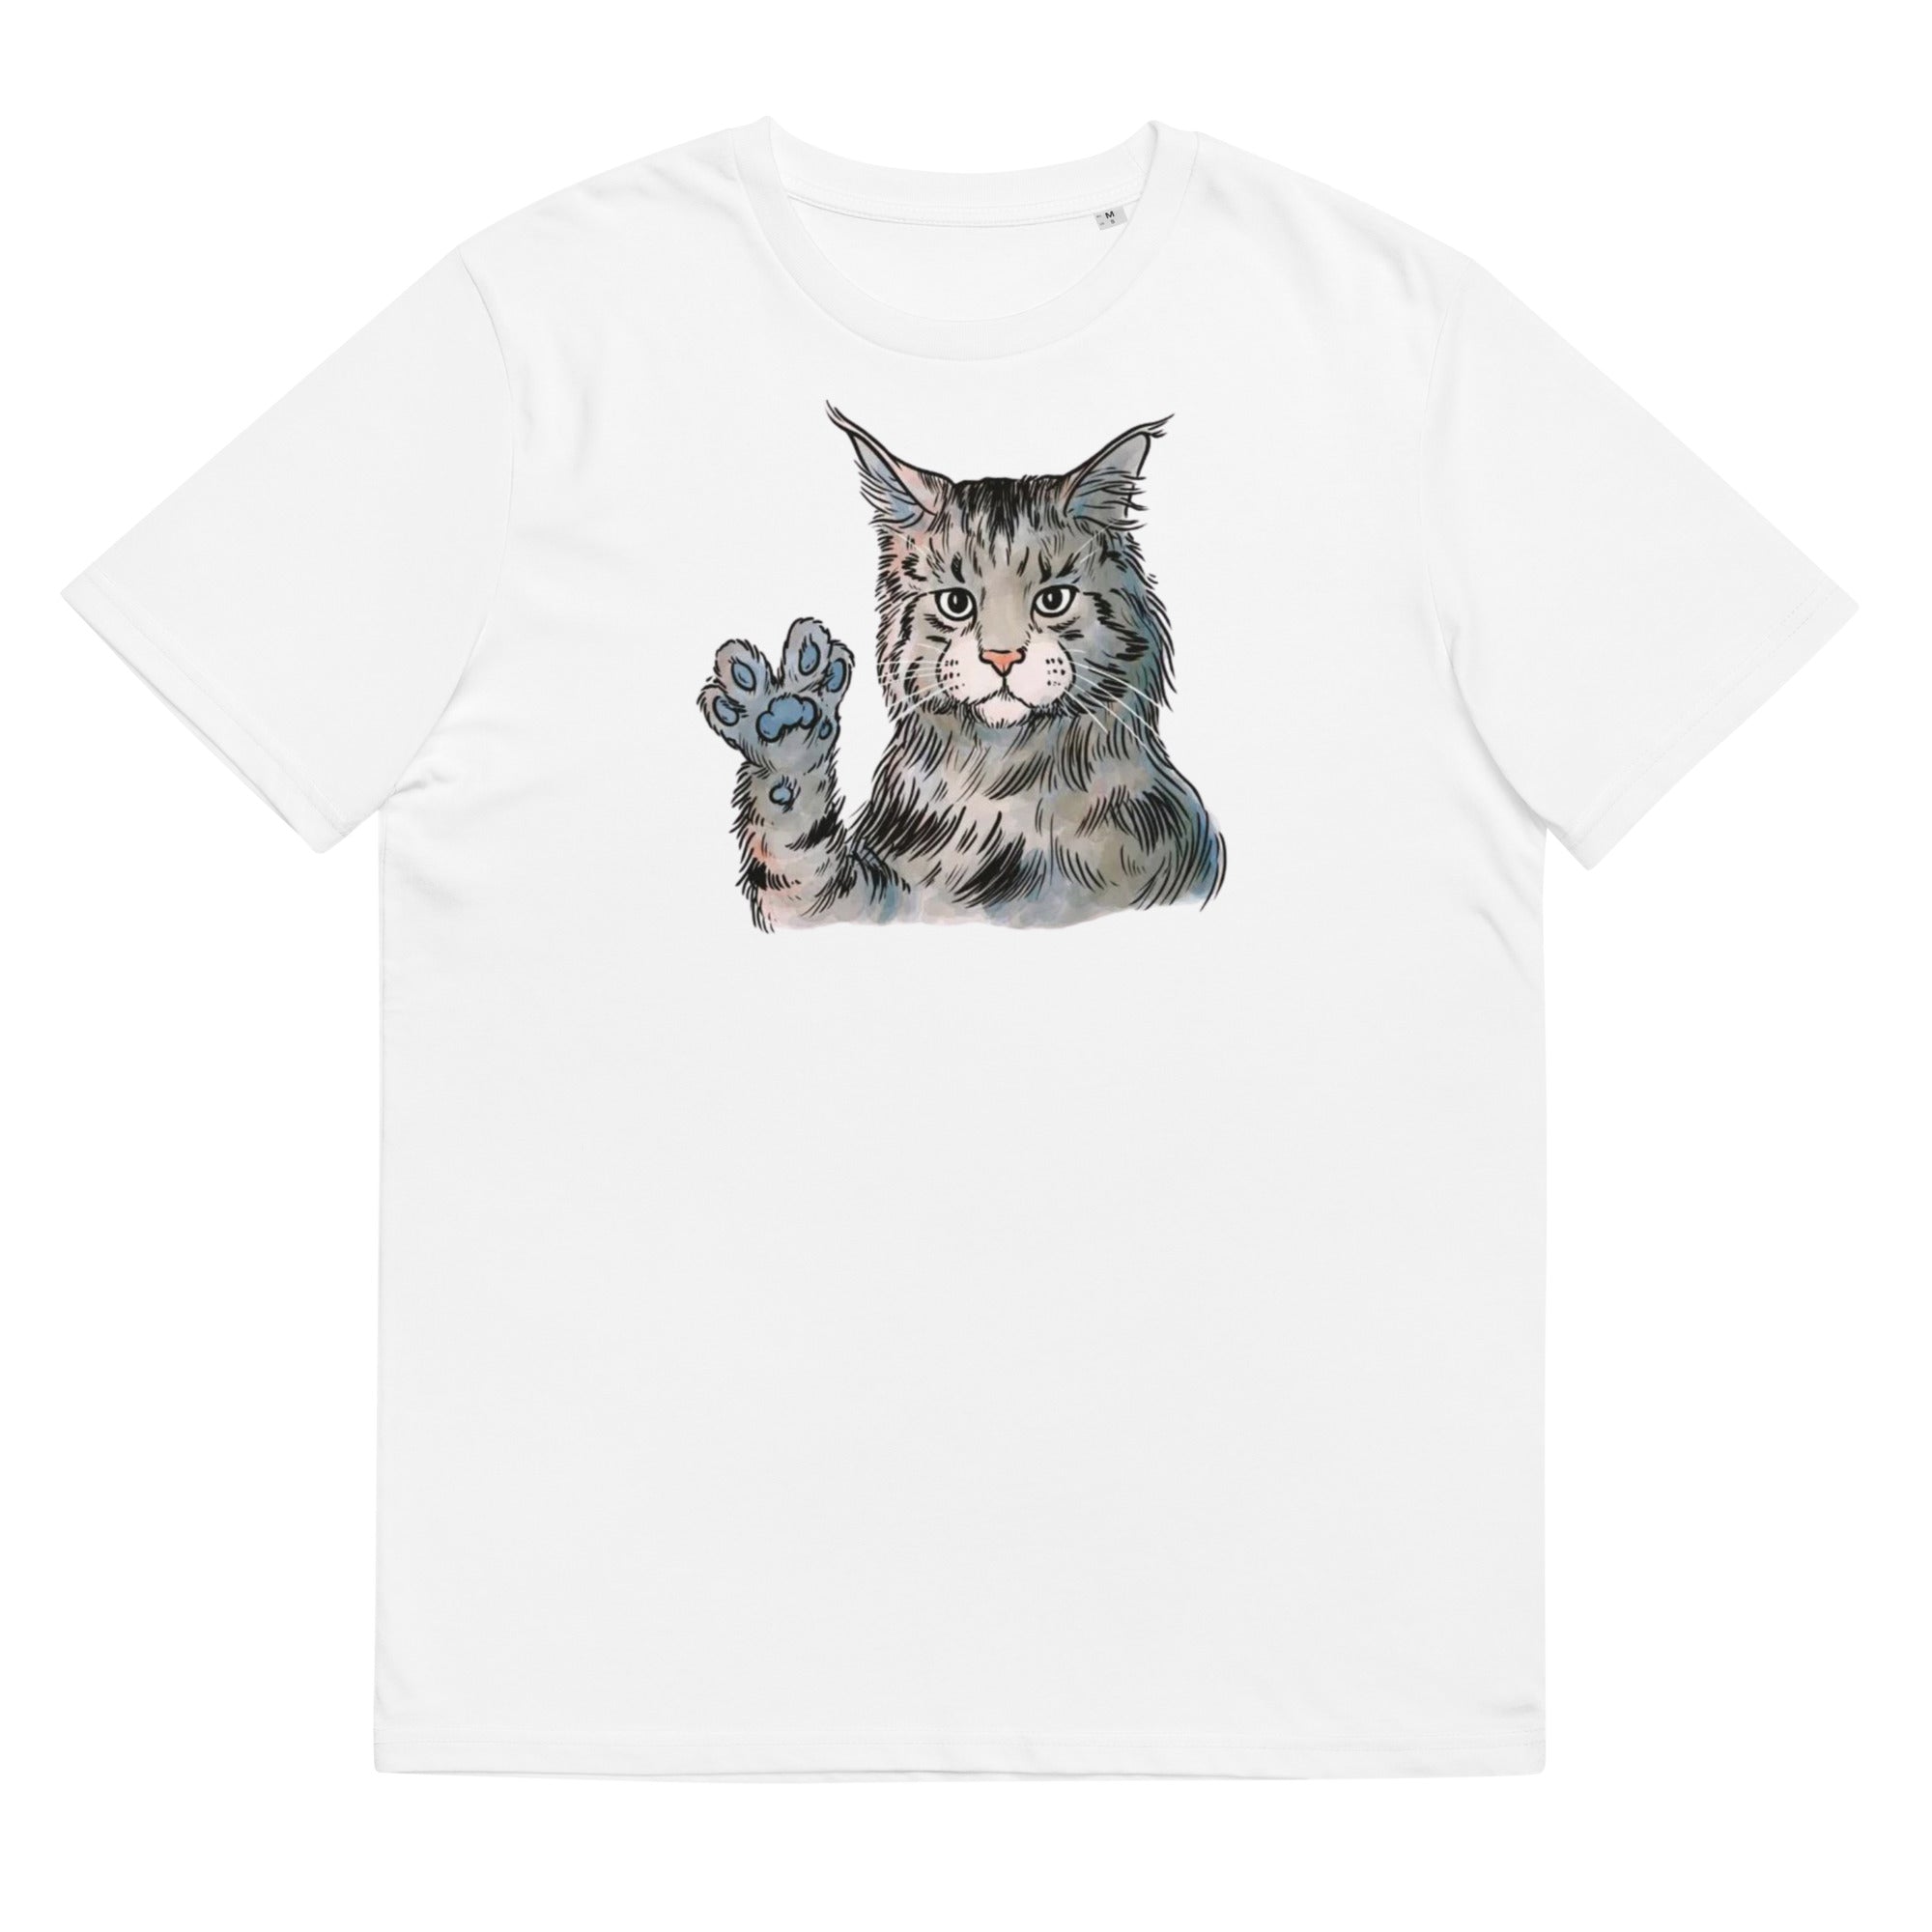 Star Trek Cat shirt